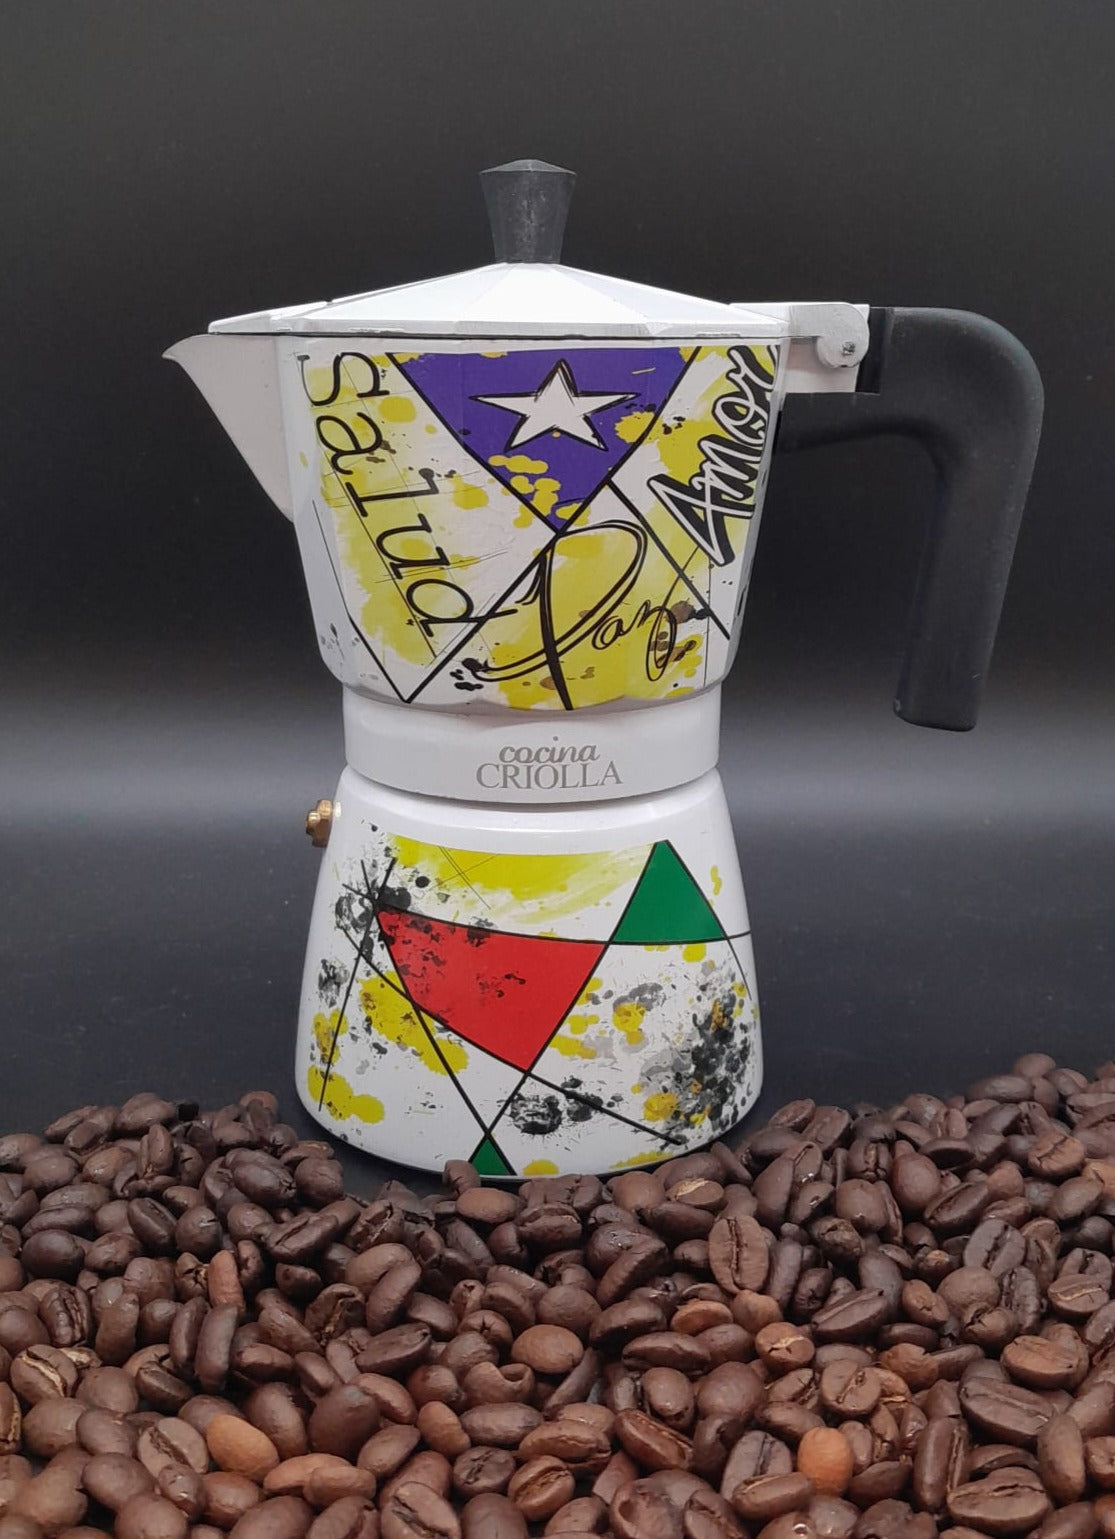 How To Use A Spanish Coffee Maker Like A Pro!